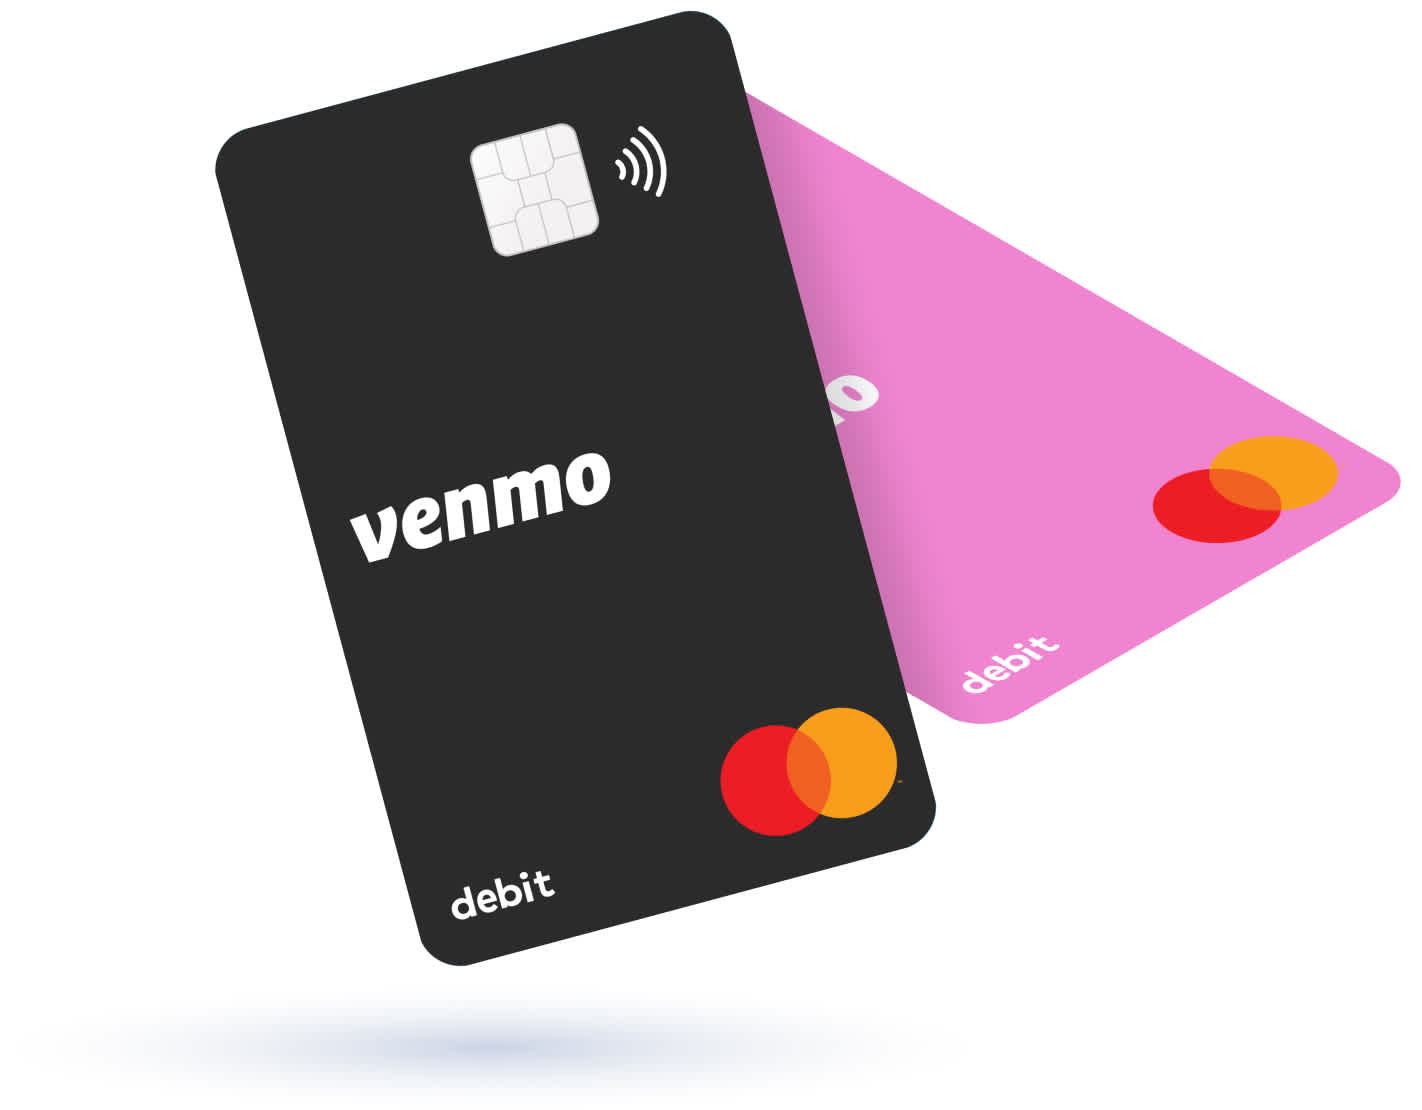 buy bitcoin with venmo card